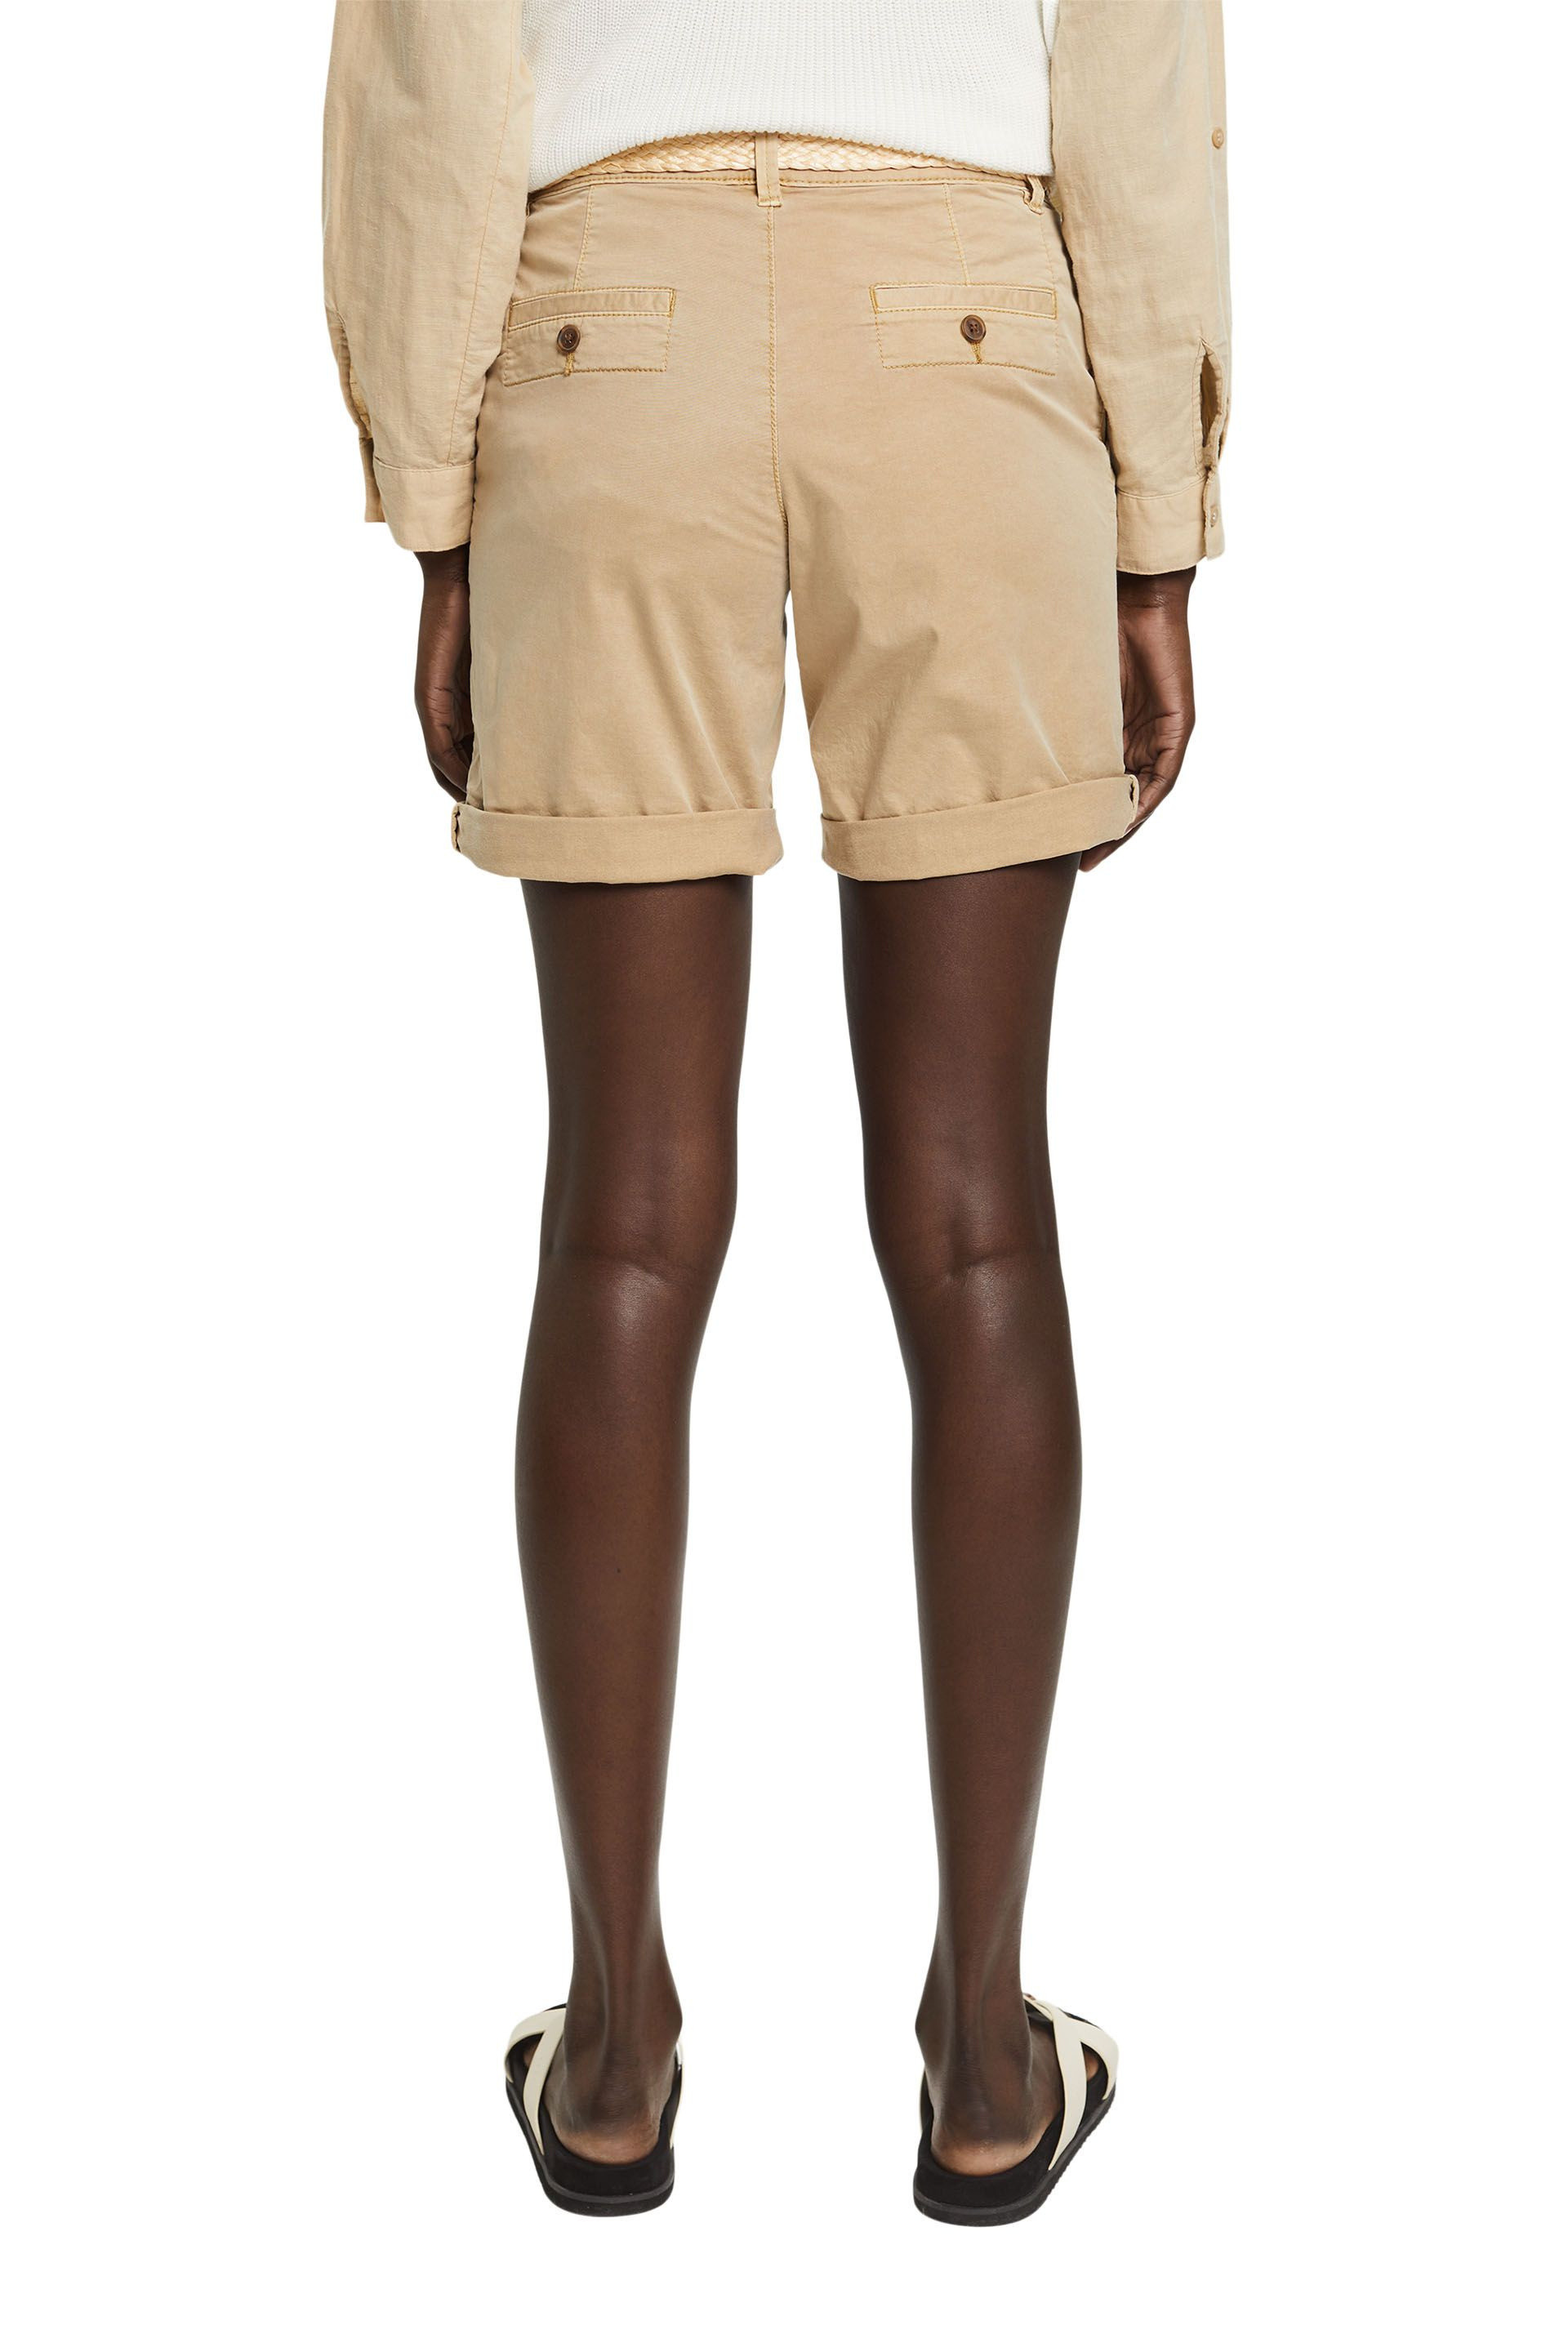 Esprit - Shorts with braided raffia belt, Sand, large image number 3